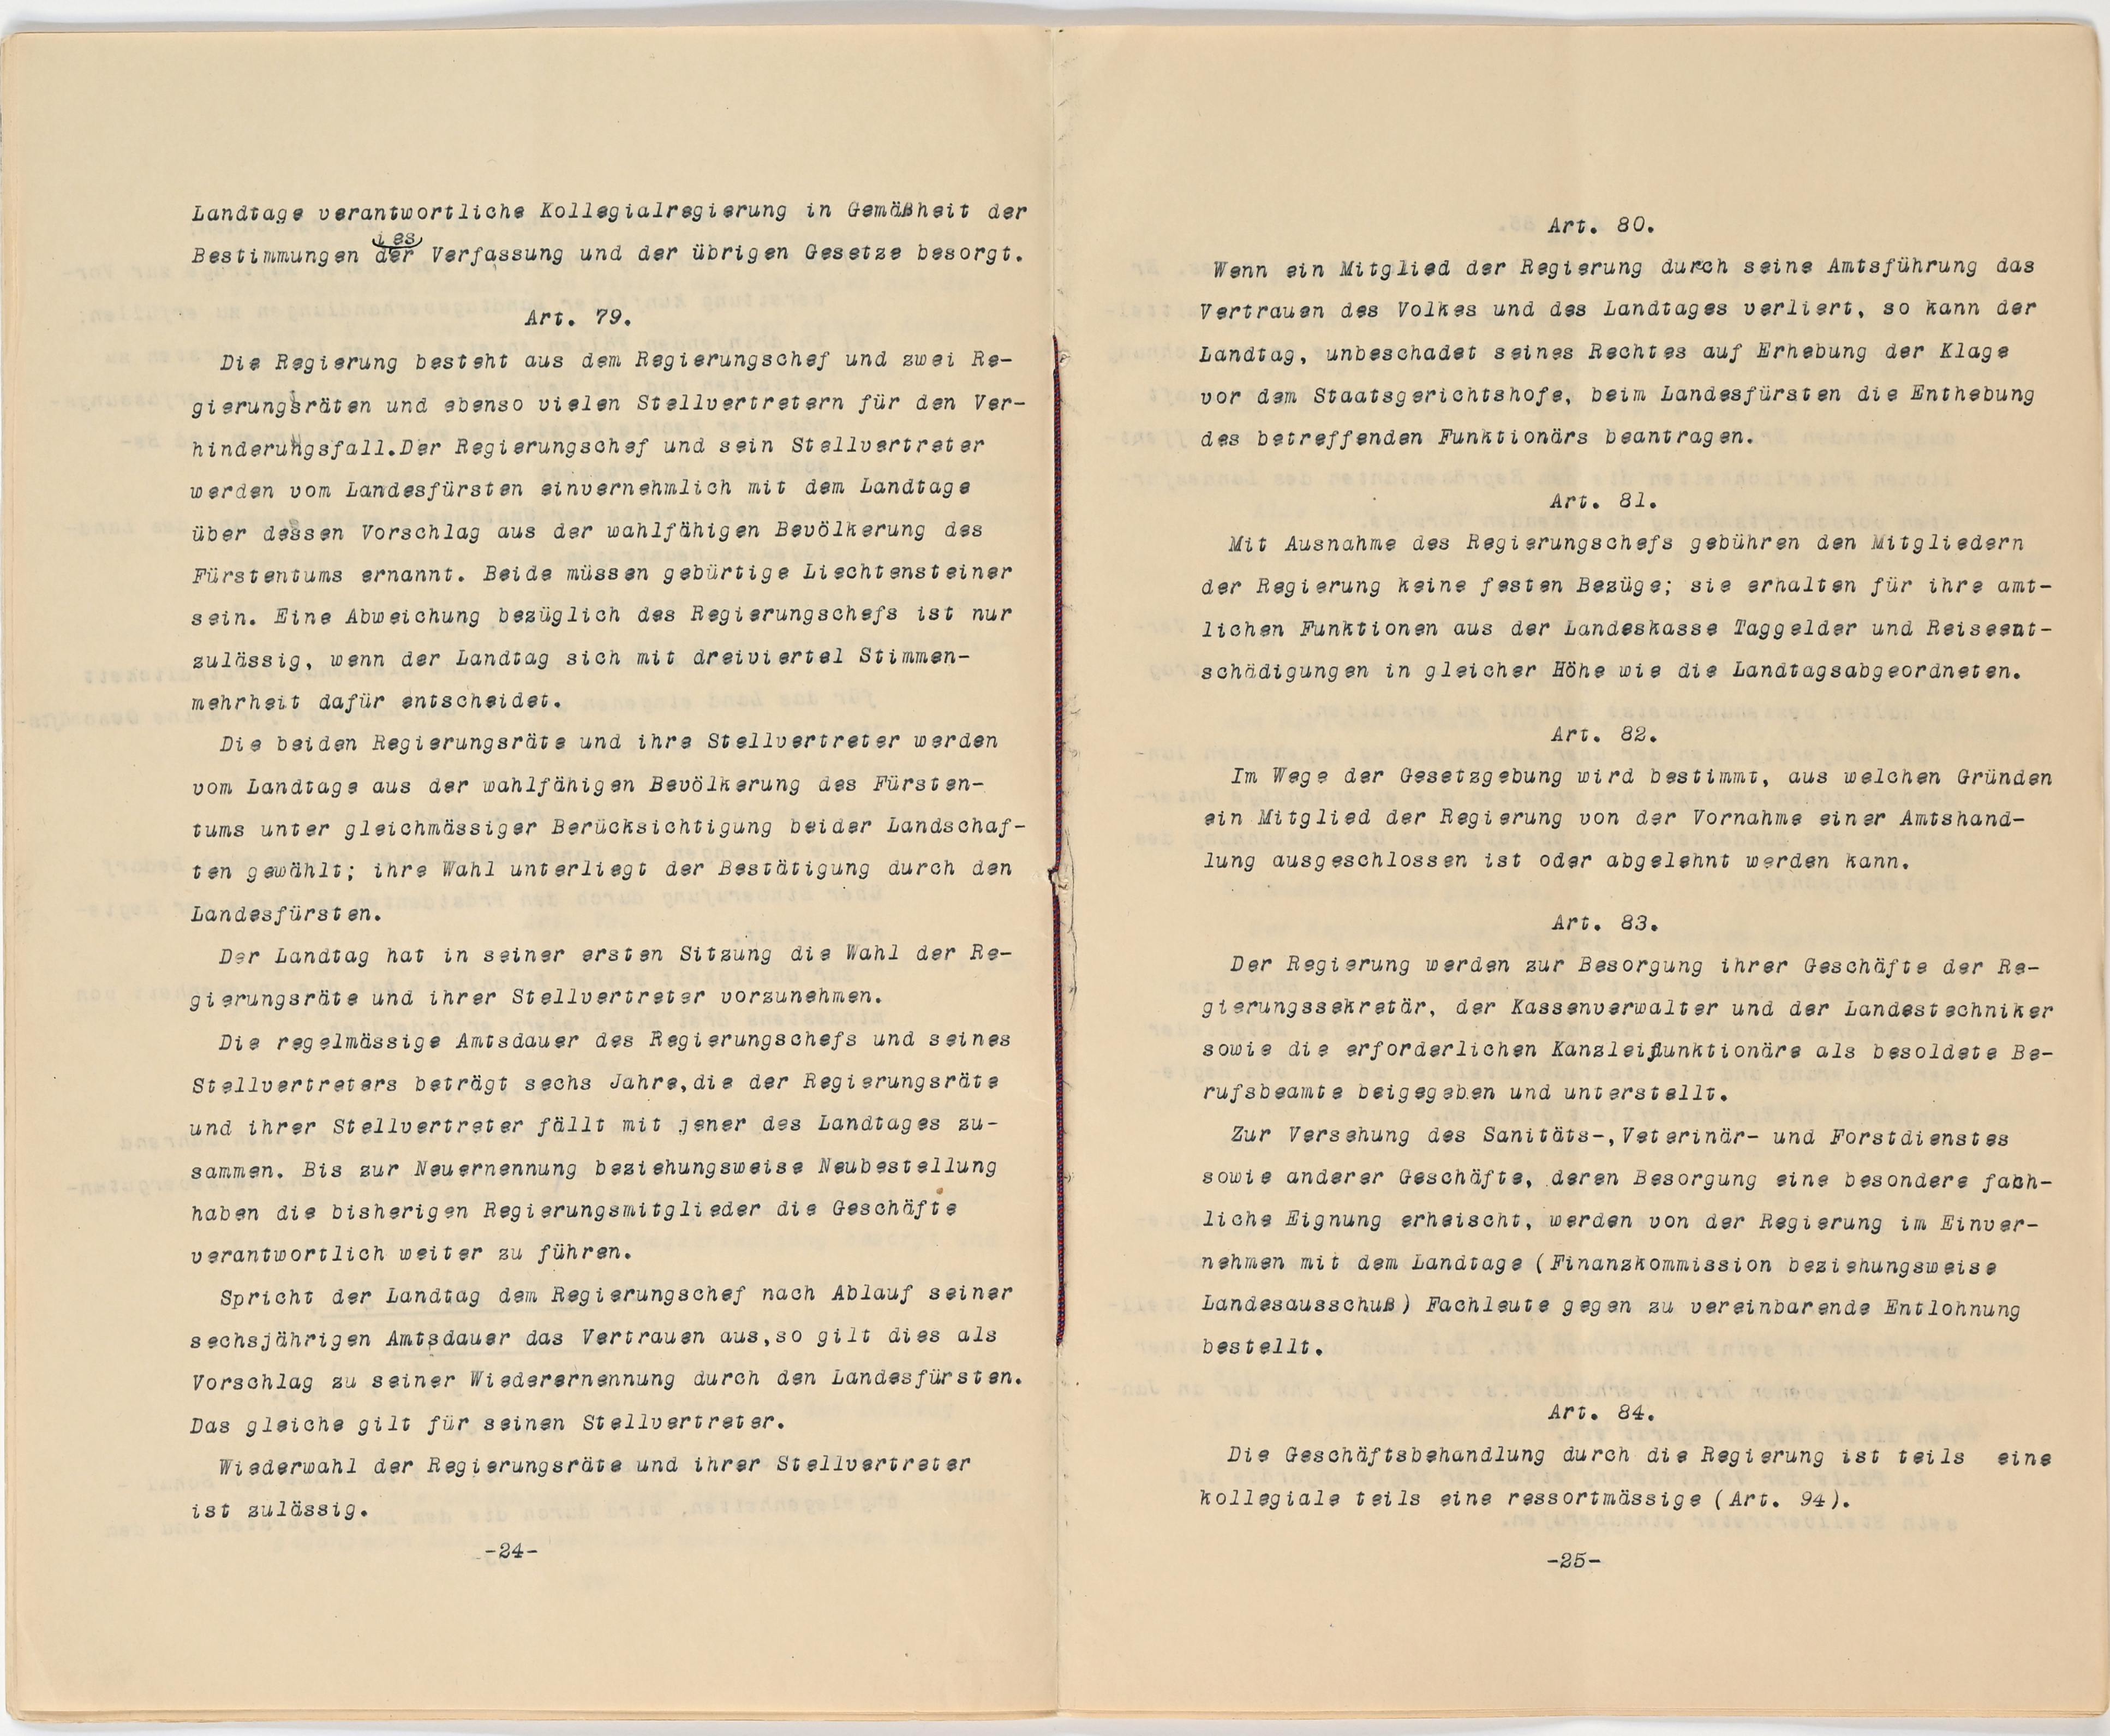 Verfassung 1921 Art. 79 bis Art. 84